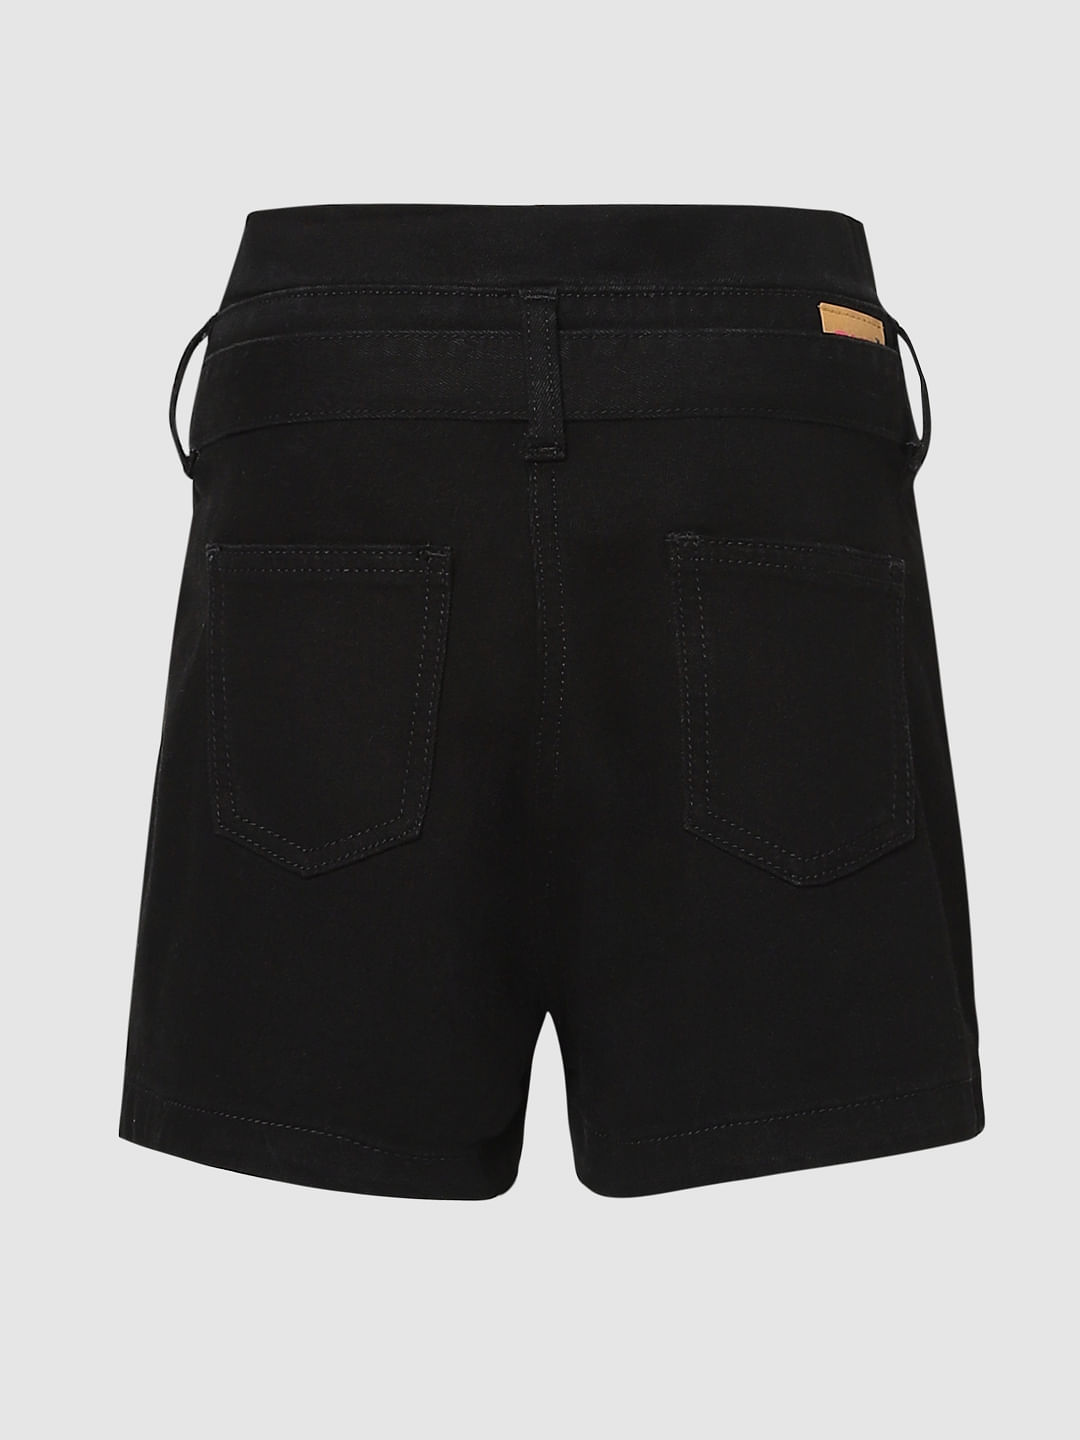 My Favorite Denim Shorts For Summer! — by CHLOE WEN